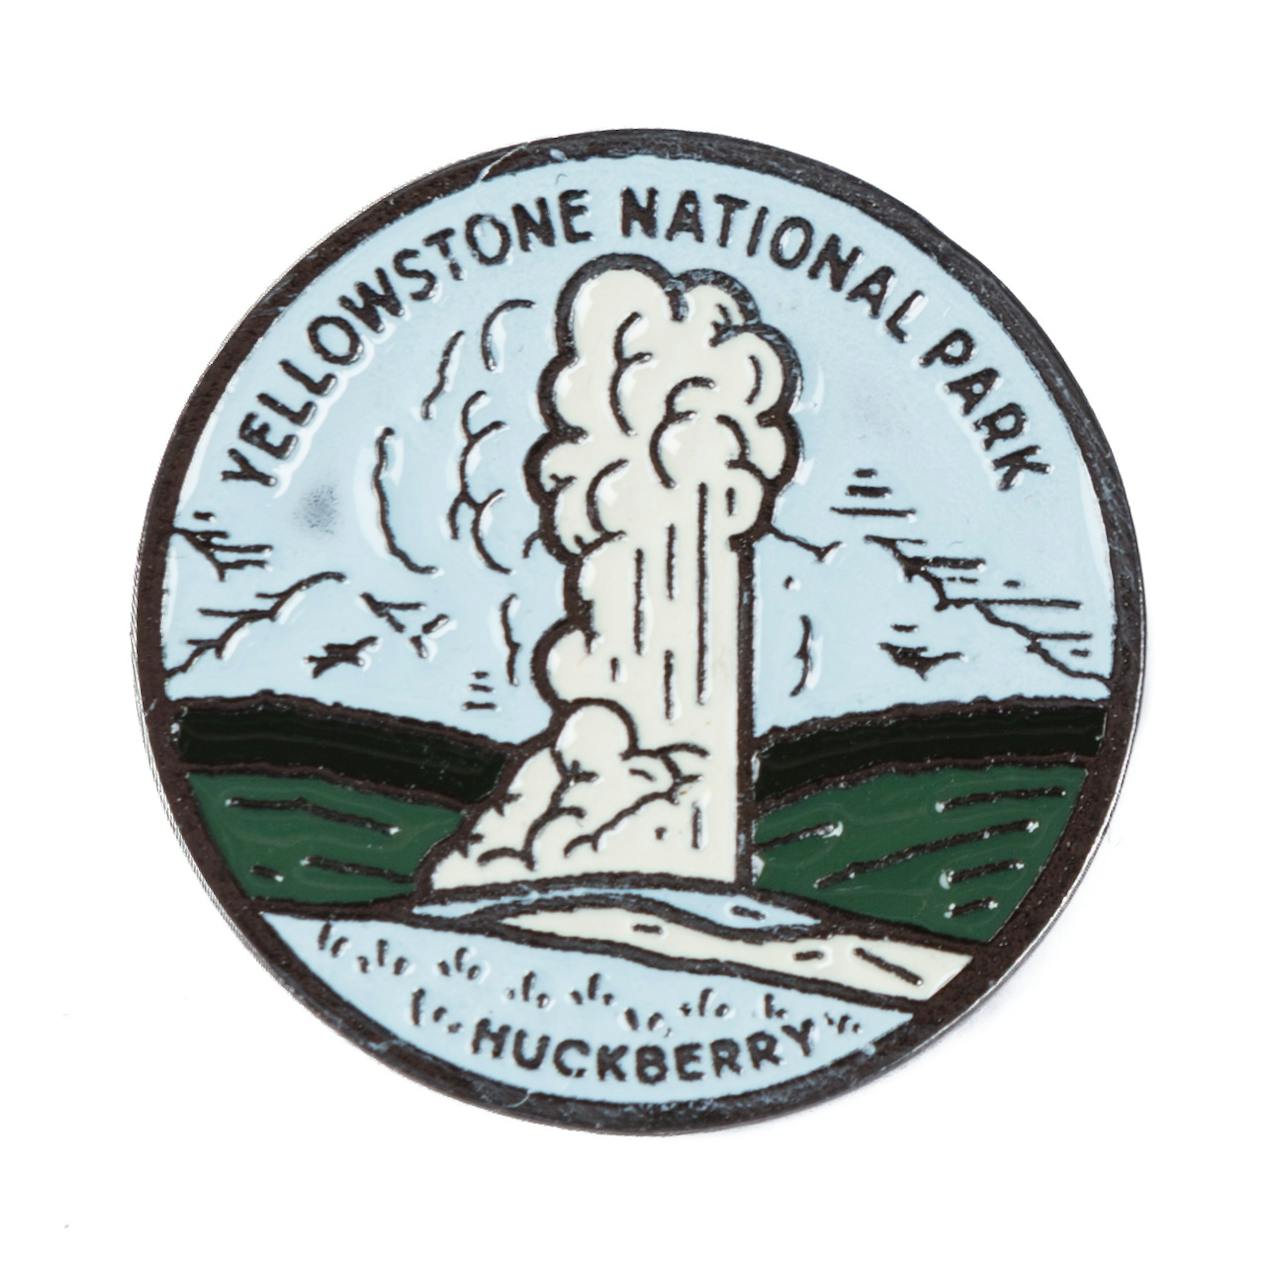 Huckberry Yellowstone National Park Pin